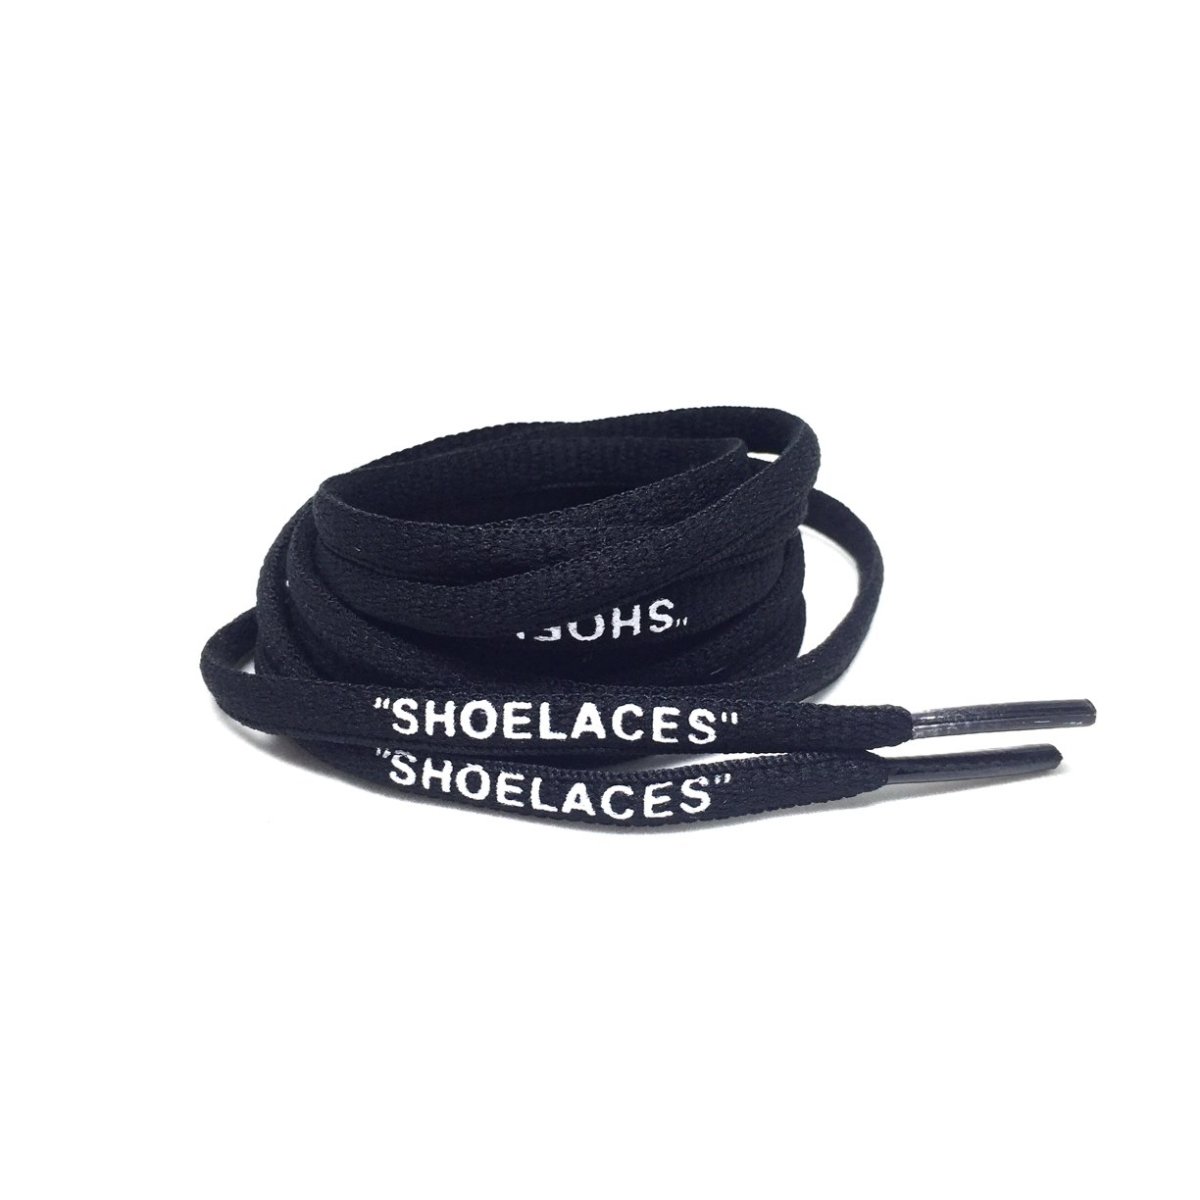 Off White Shoelaces - Oval | Presto | Vapormax | Slickieslaces